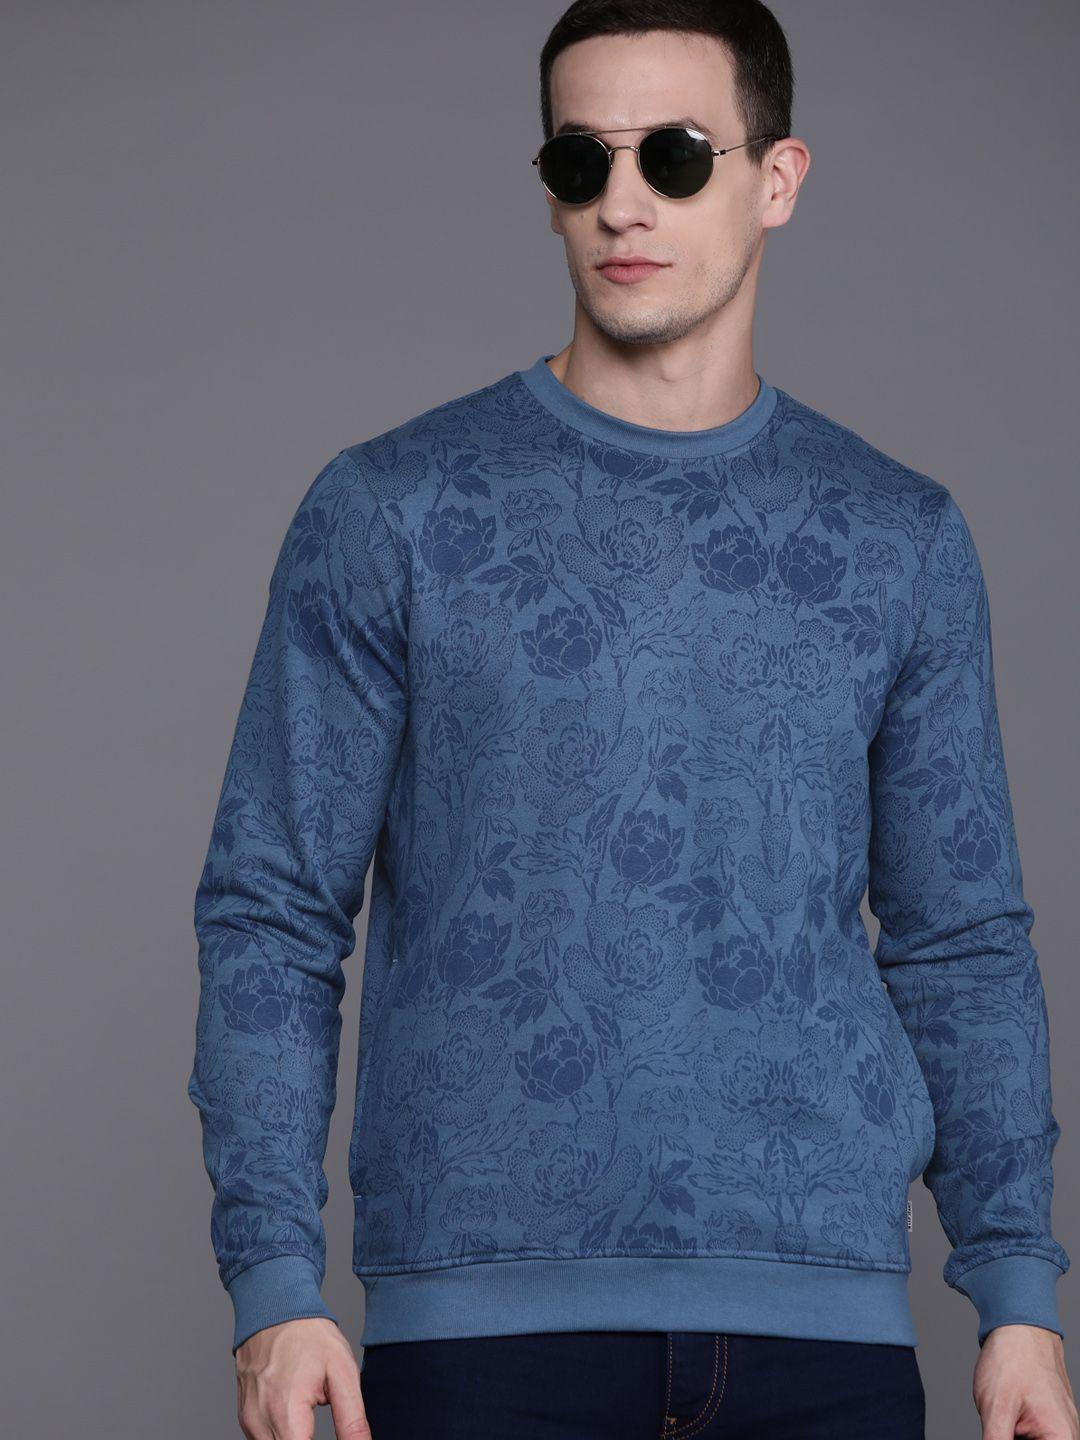 louis philippe jeans pure cotton printed sweatshirt